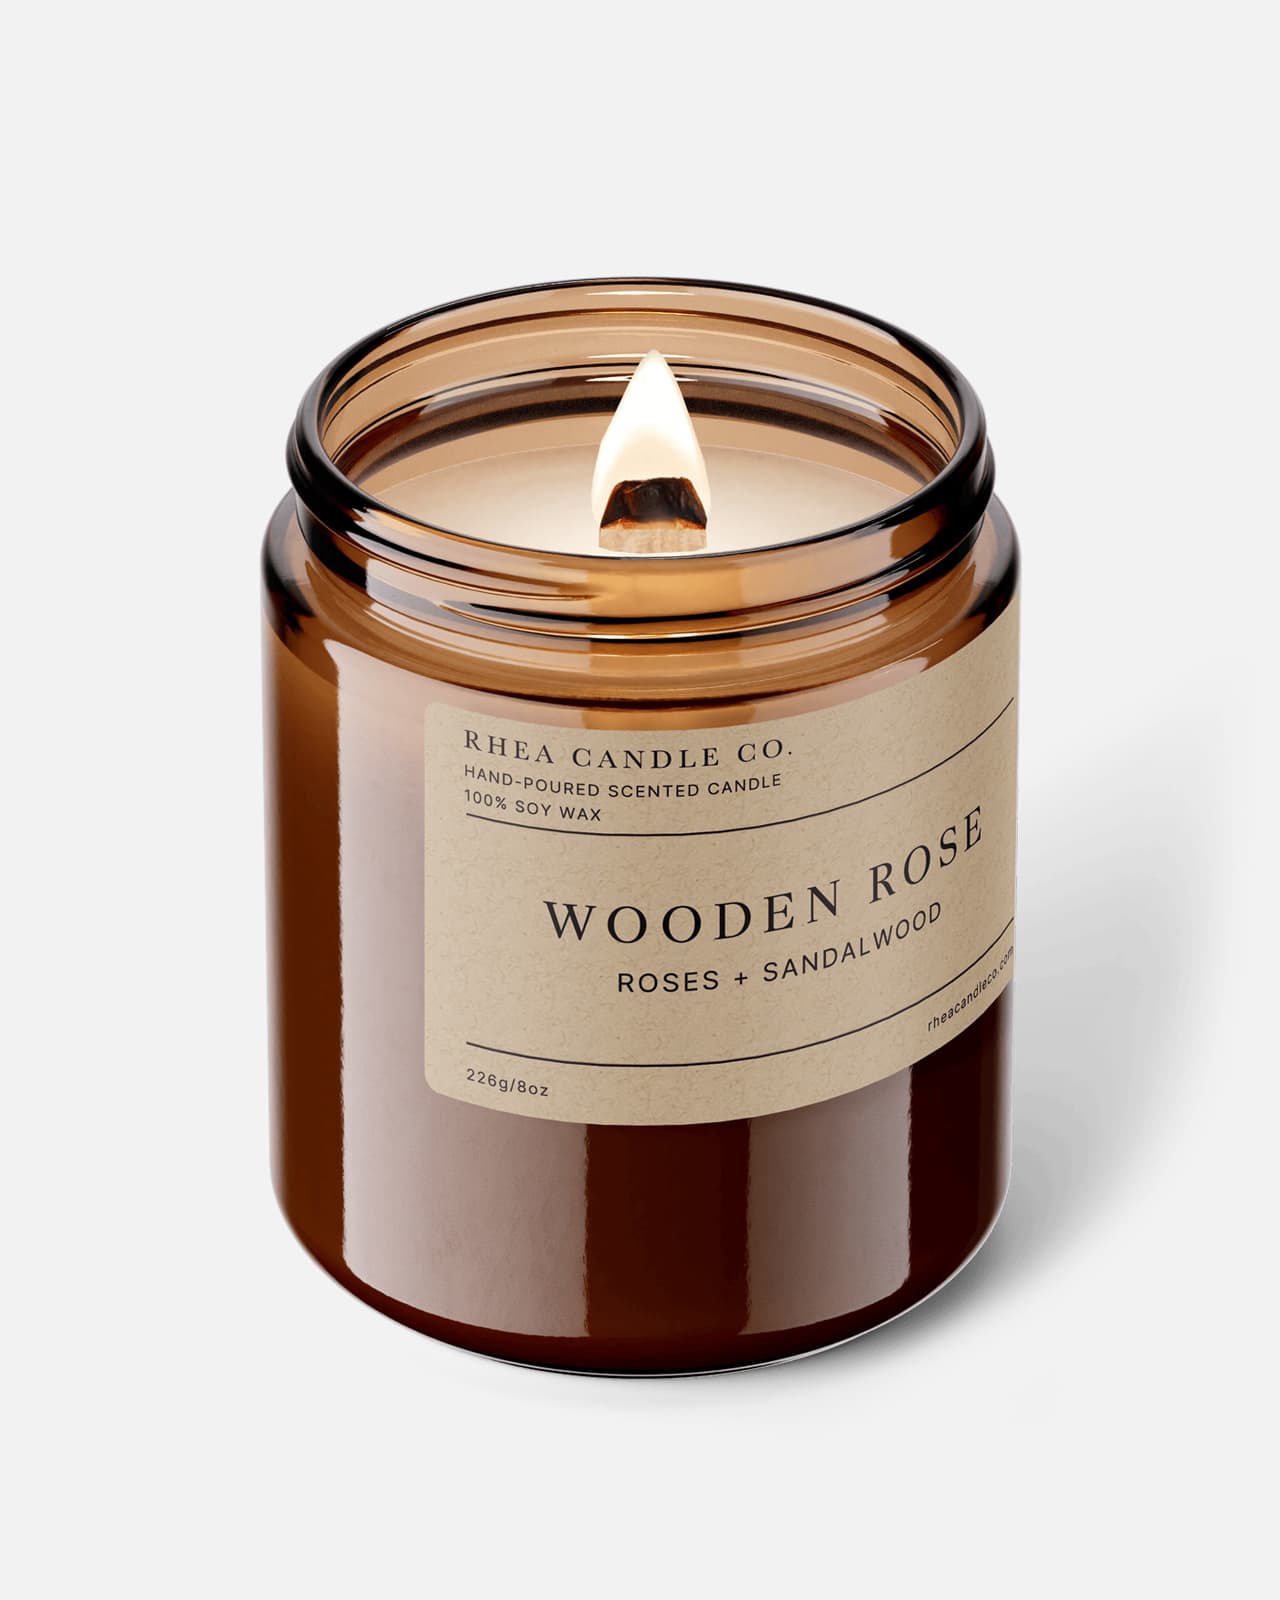 Wooden Rose Candle | Rose + Sandalwood - Rhea Candle Co.